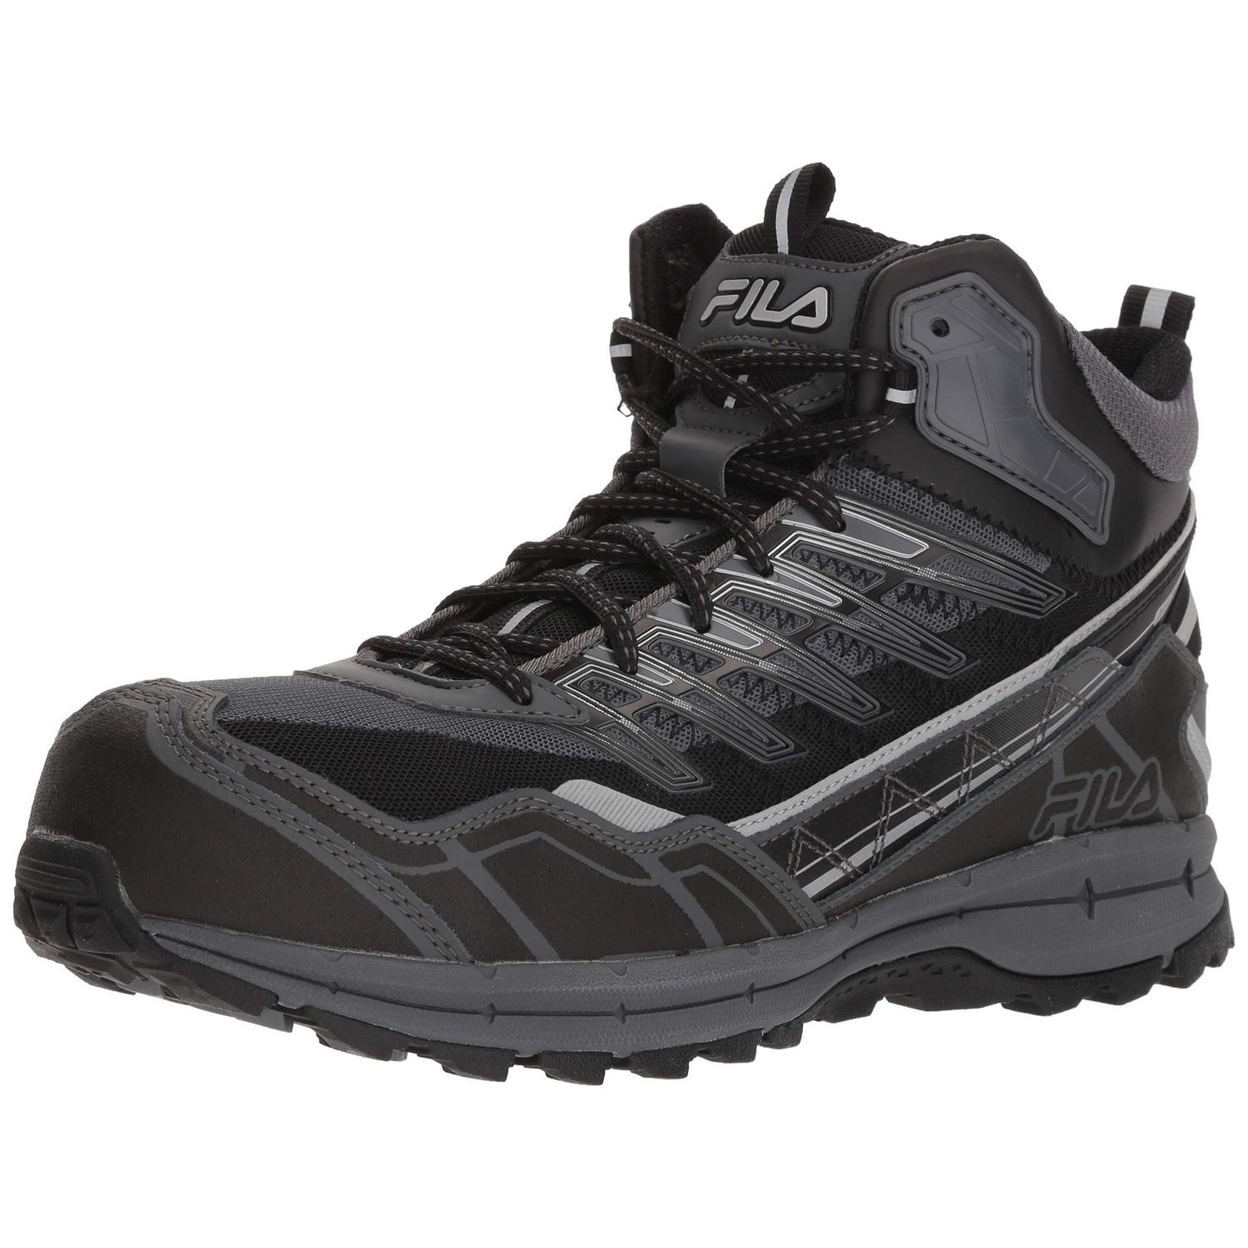 Fila Men's Hail Storm 3 Mid Composite Toe Trail Work Shoes Ct CSRK/BLK/MSIL - CSRK/BLK/MSIL, 10